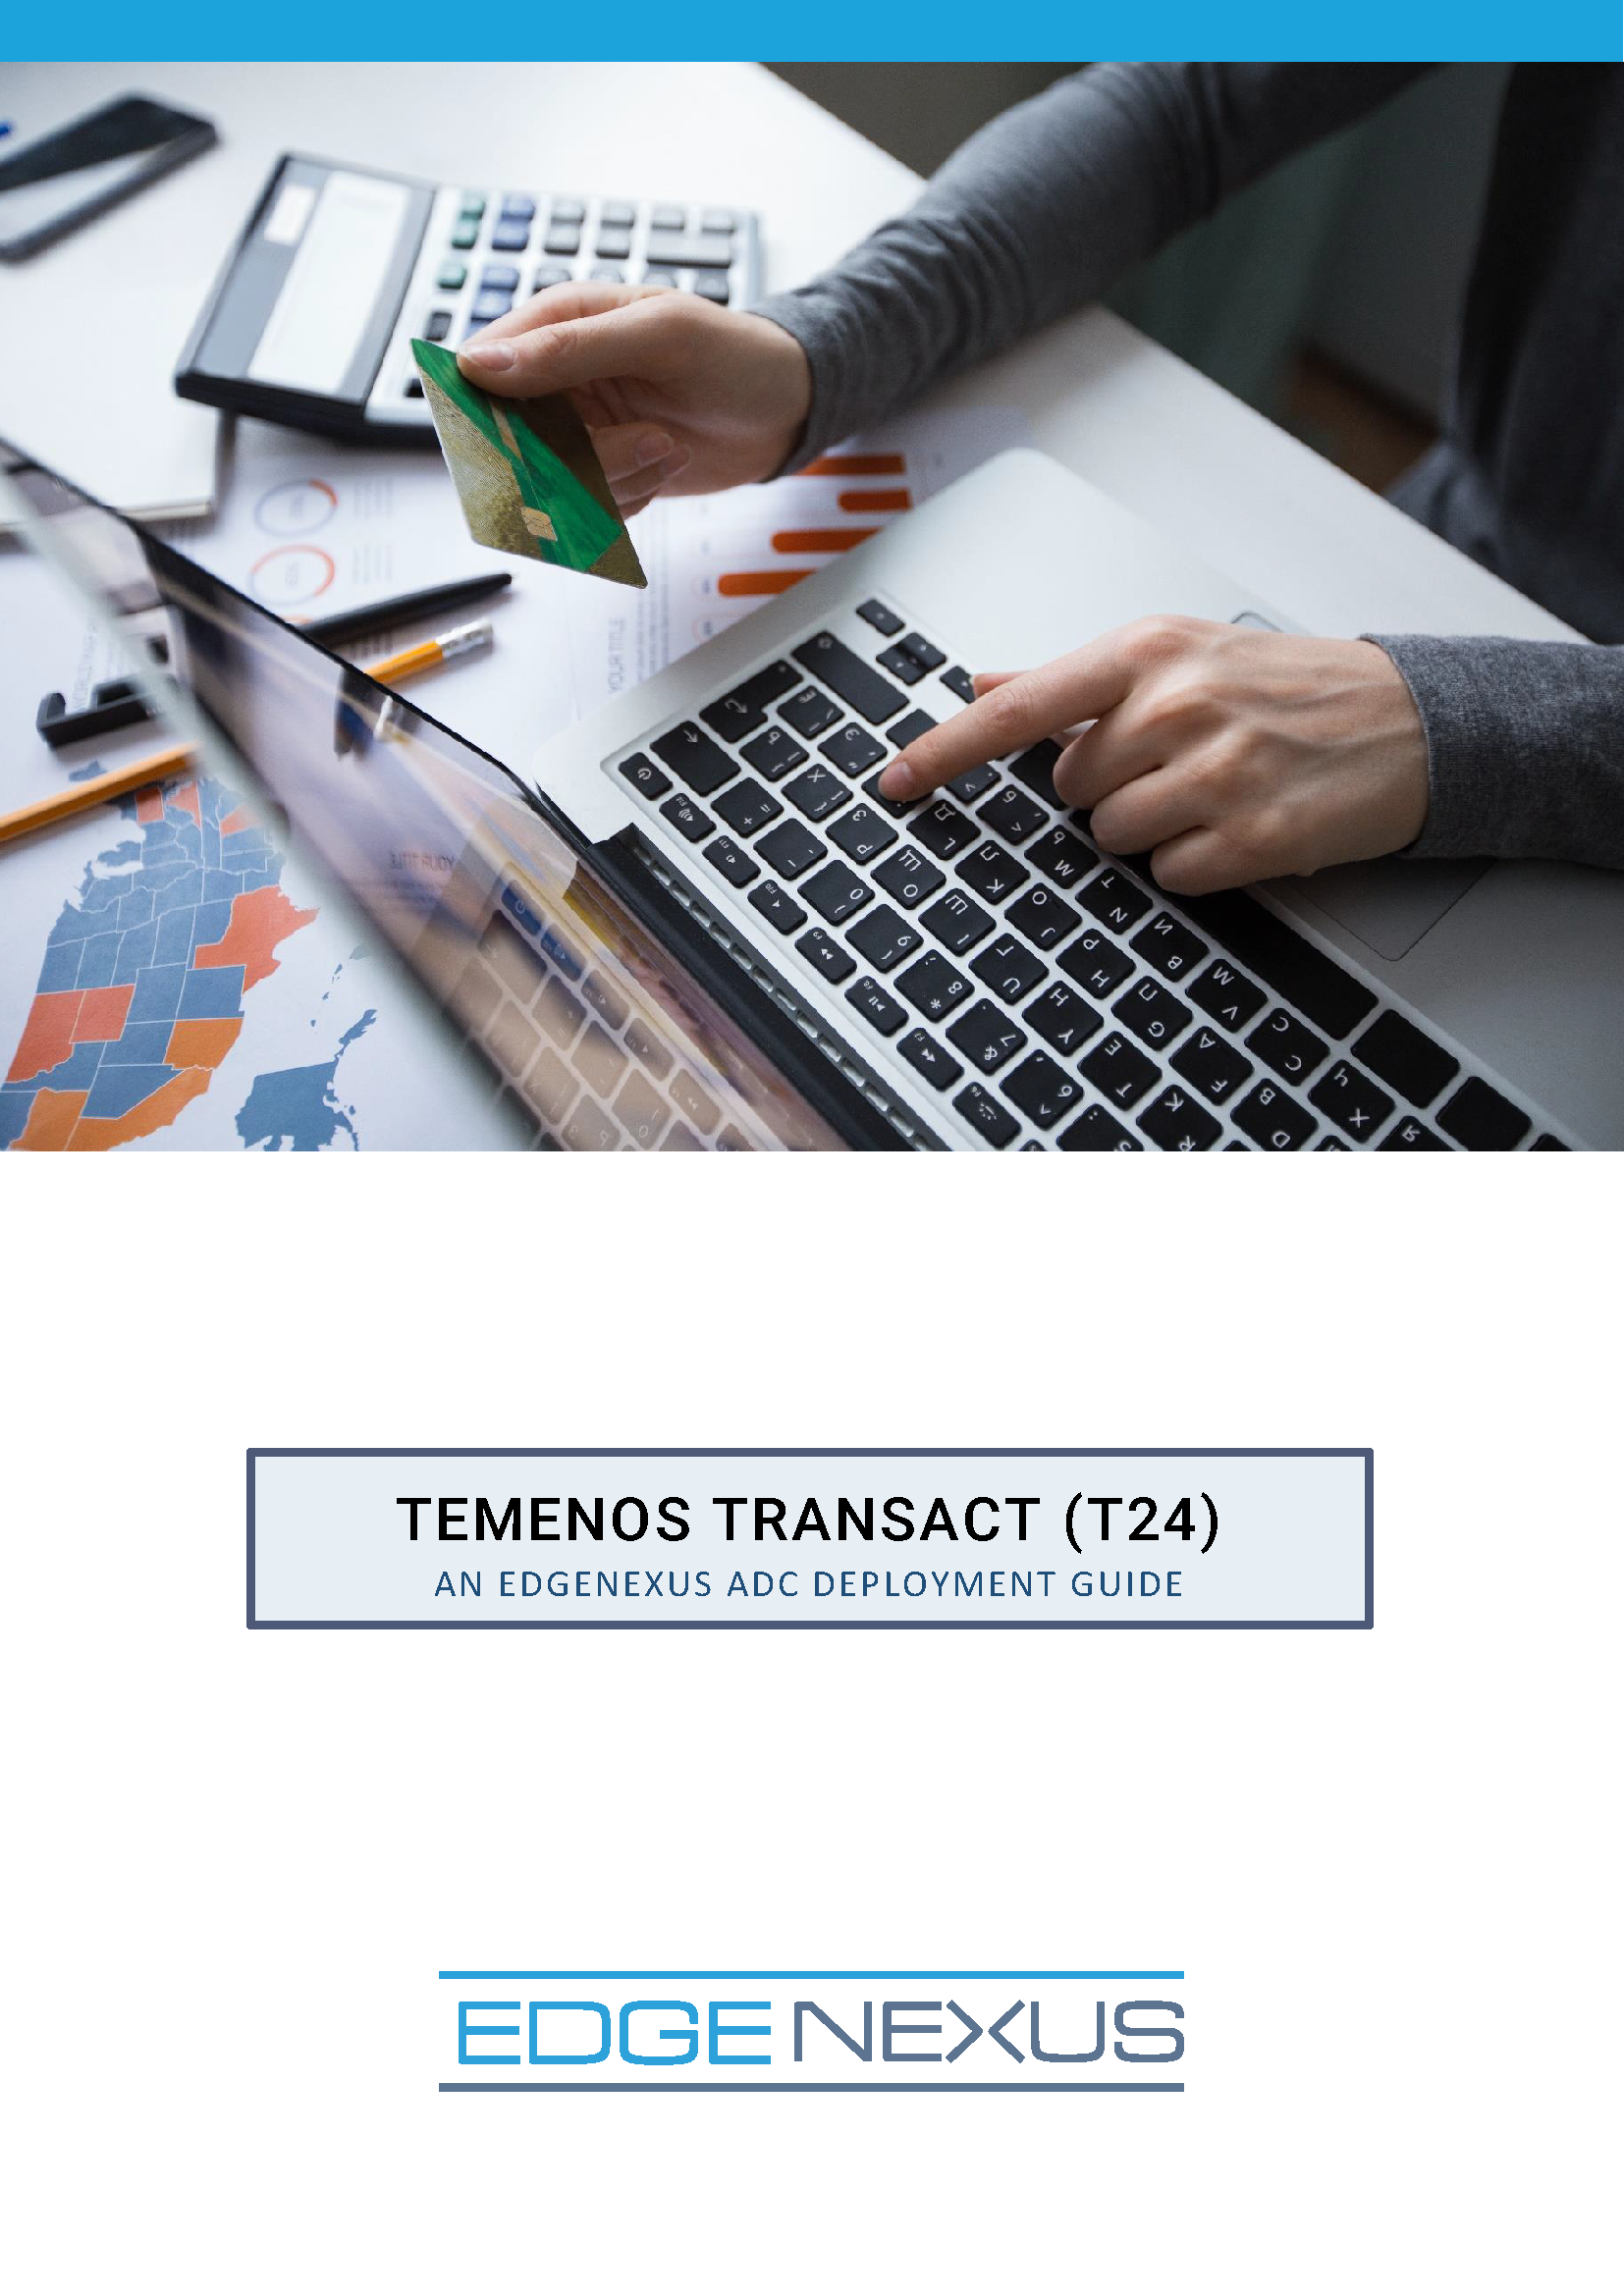 Temenos Transact Application Deployment Guide